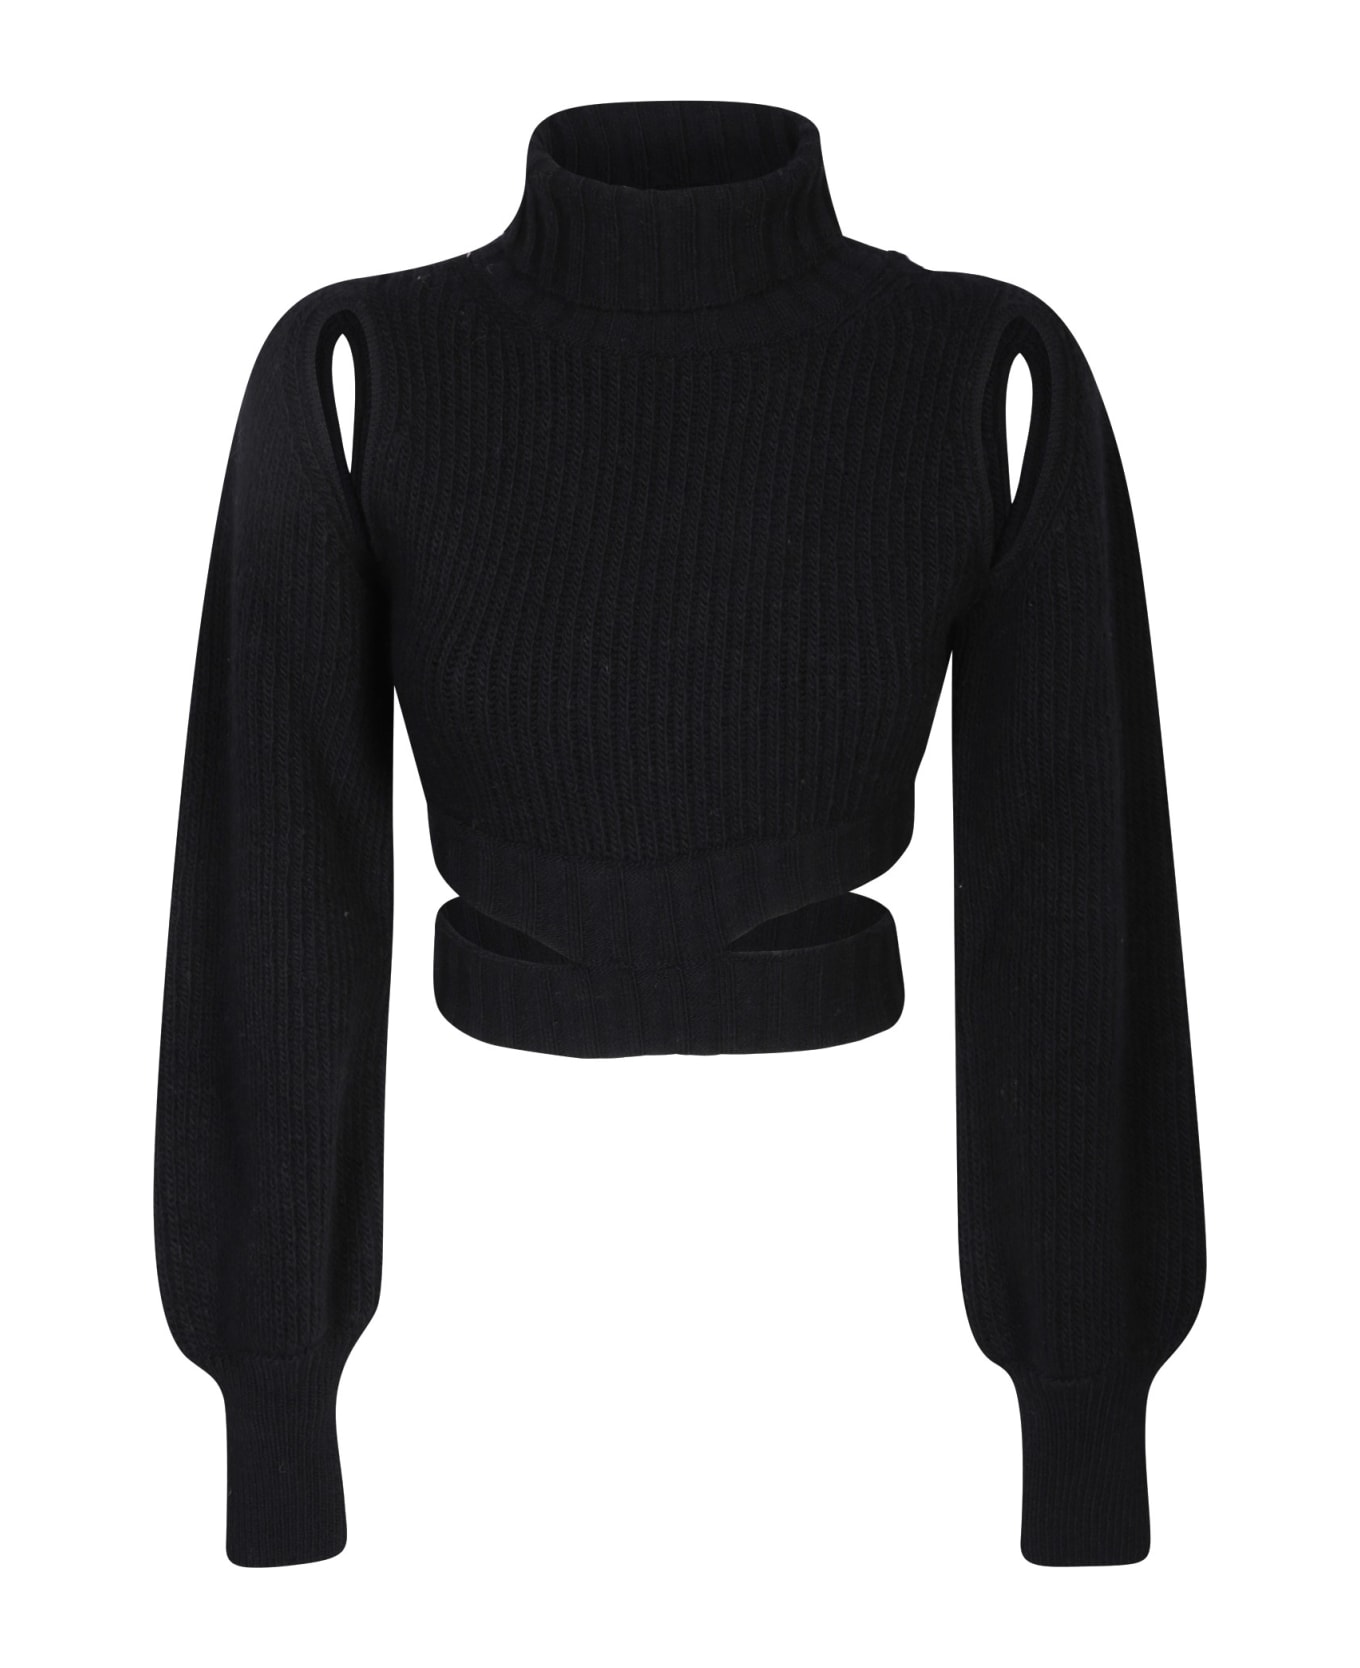 ANDREĀDAMO Cropped Black Sweater - Black